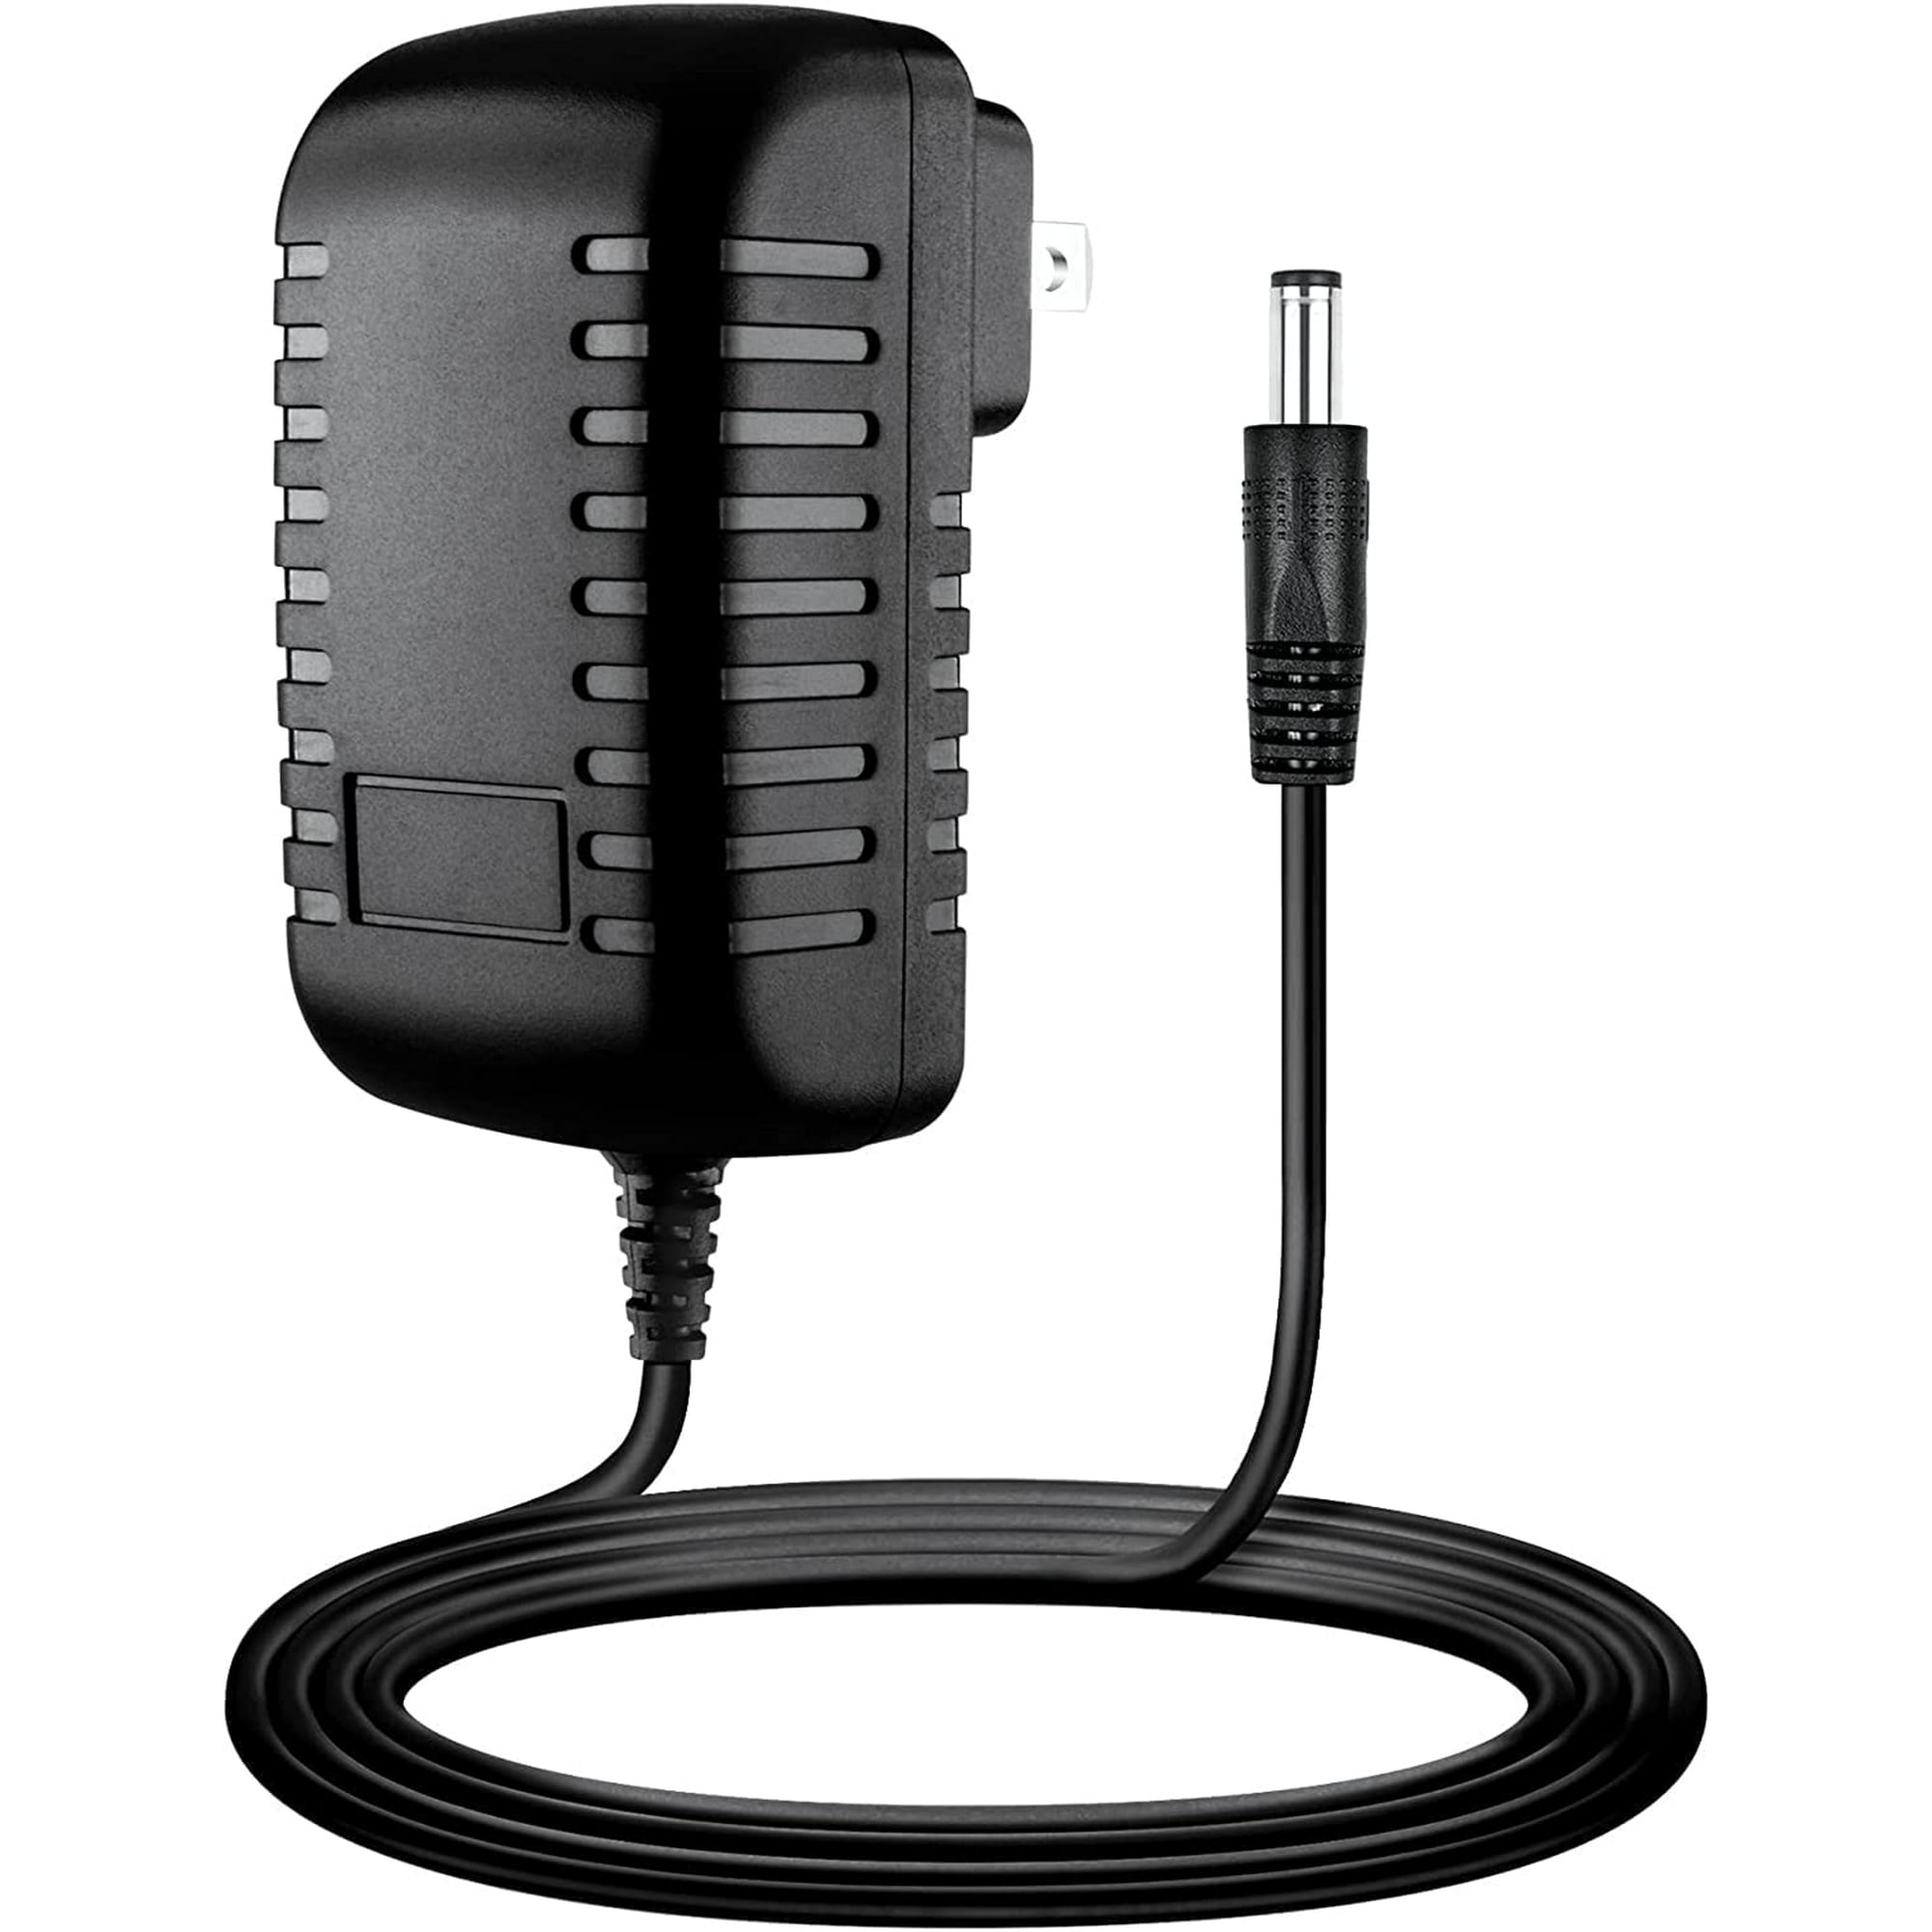 BTADP-128 HomeSpot Bluetooth Transmitter for TV Headphone Low Latency  Wireless 3.5mm Audio Adapter iPad TV to Bluetooth Speaker or Headpho